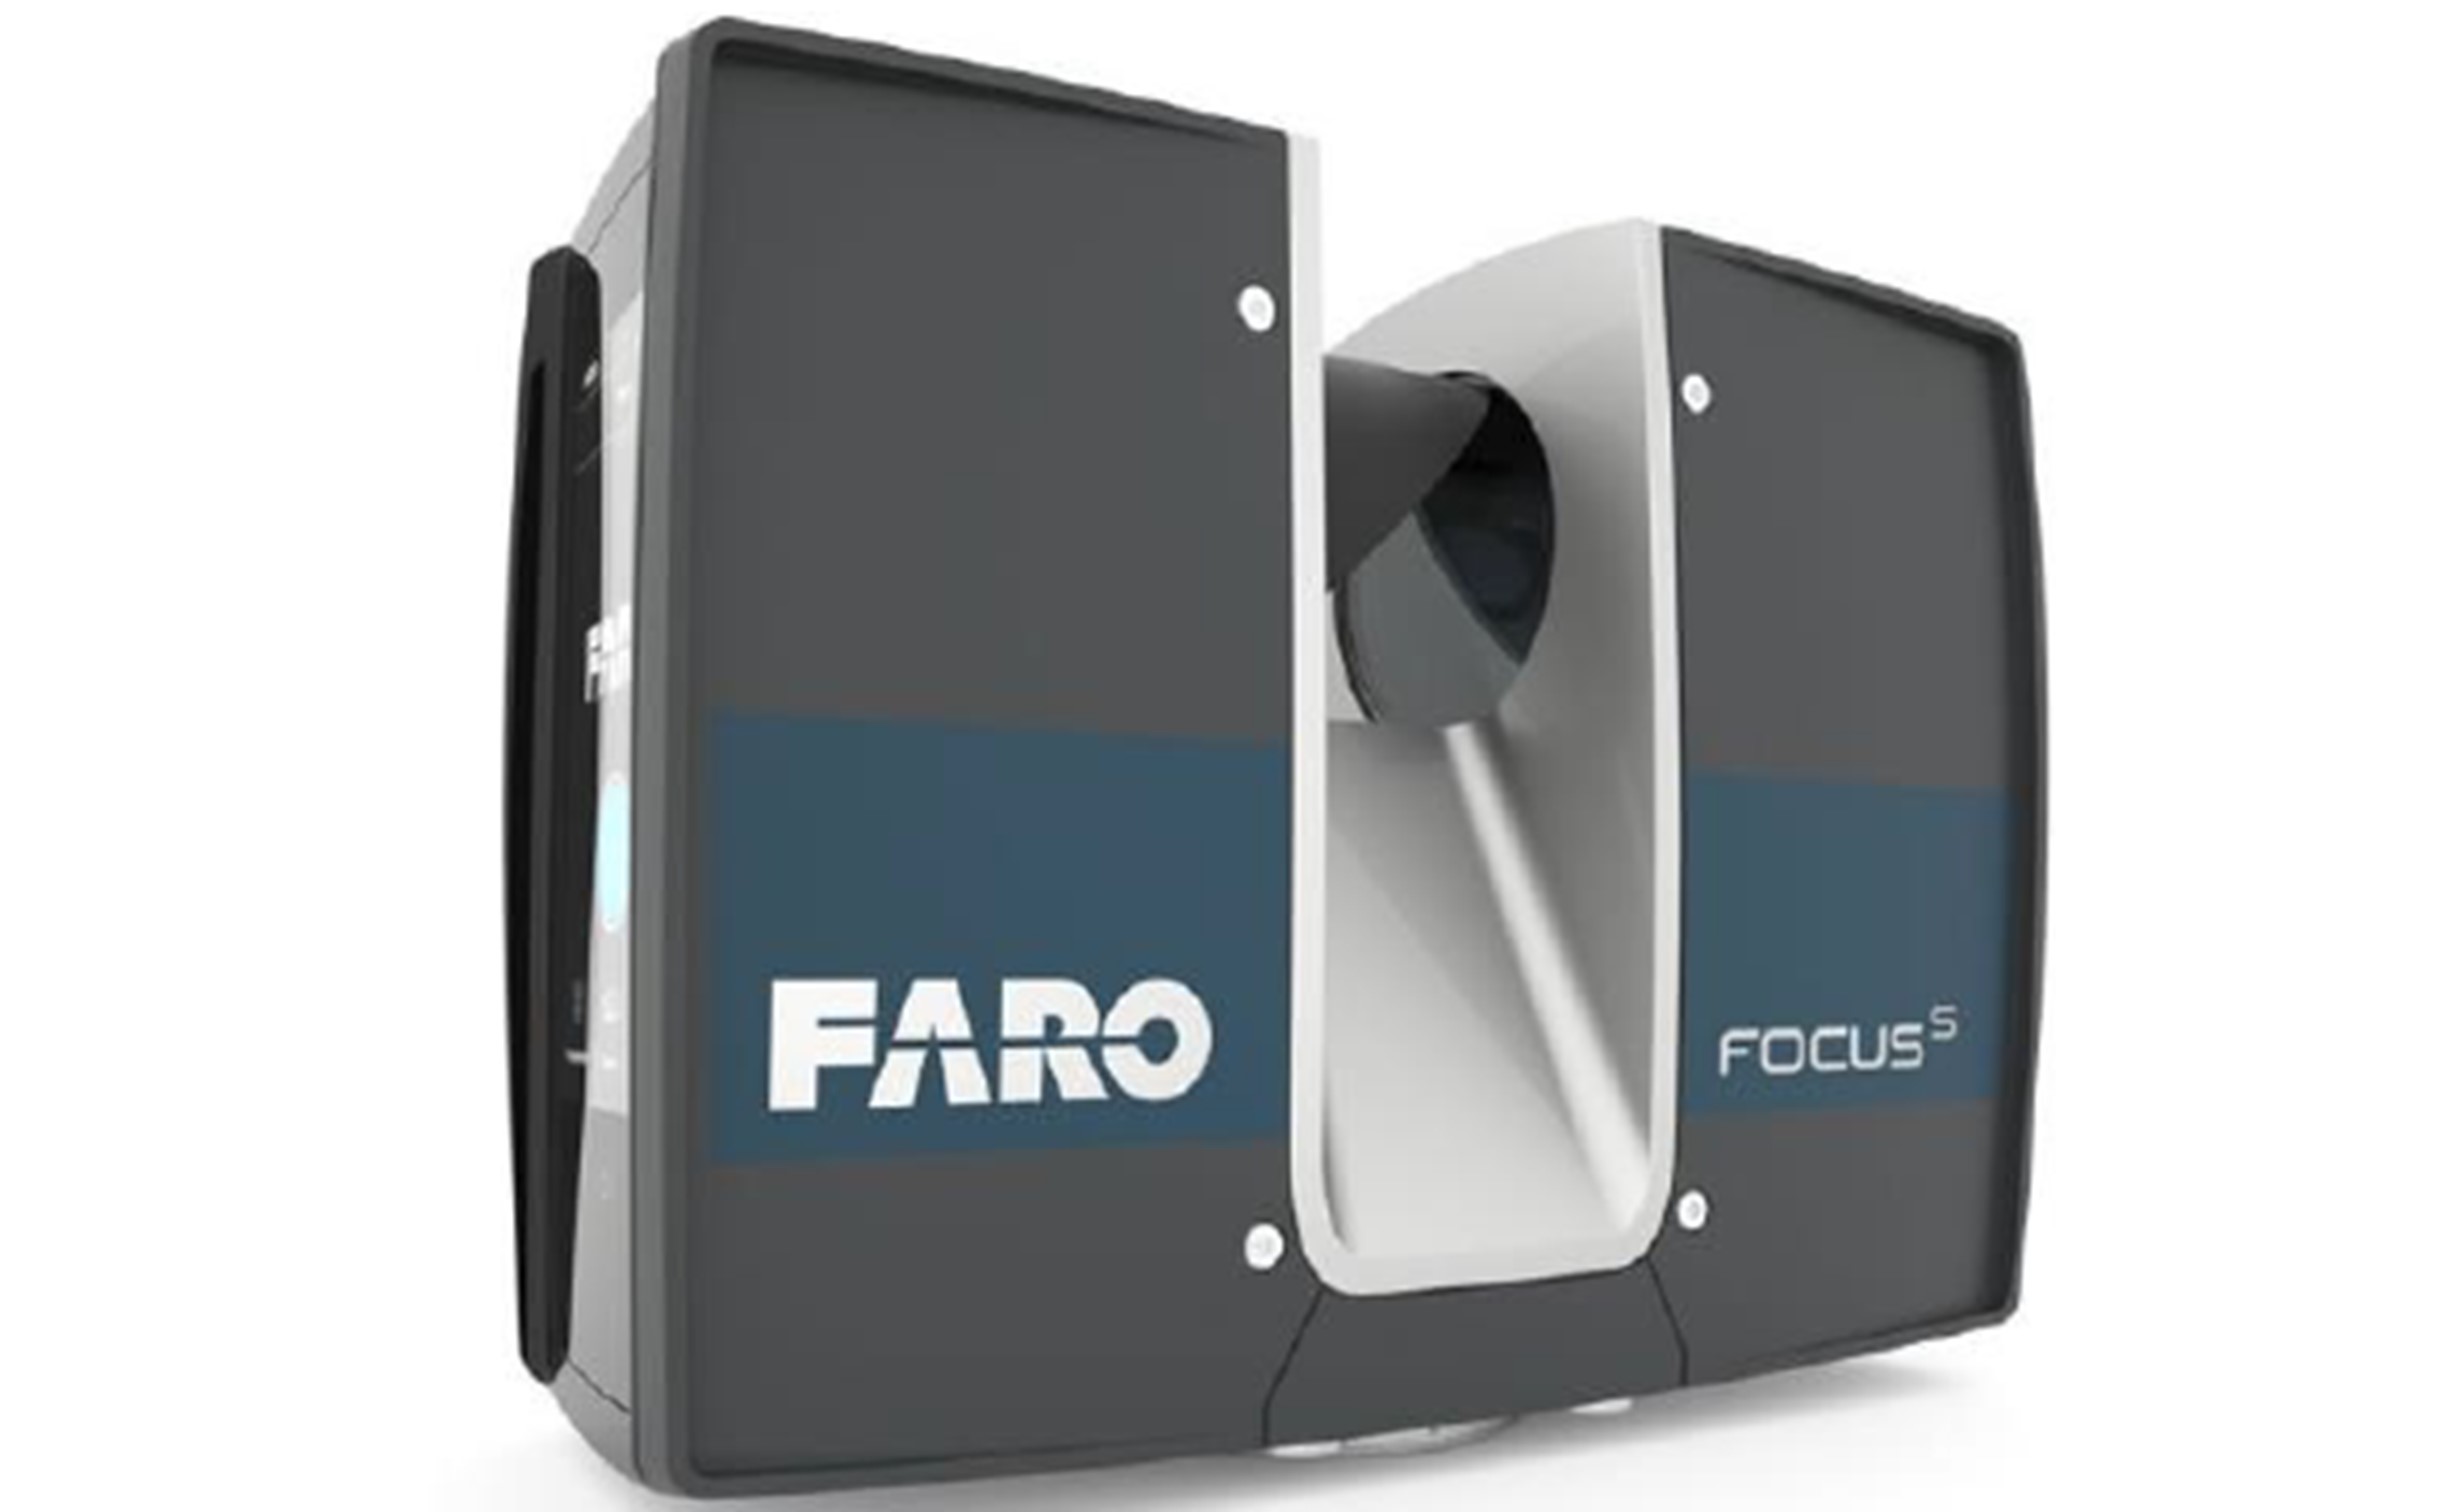 FARO Focus 3D Laser Scanner Model: S150, Plus S150